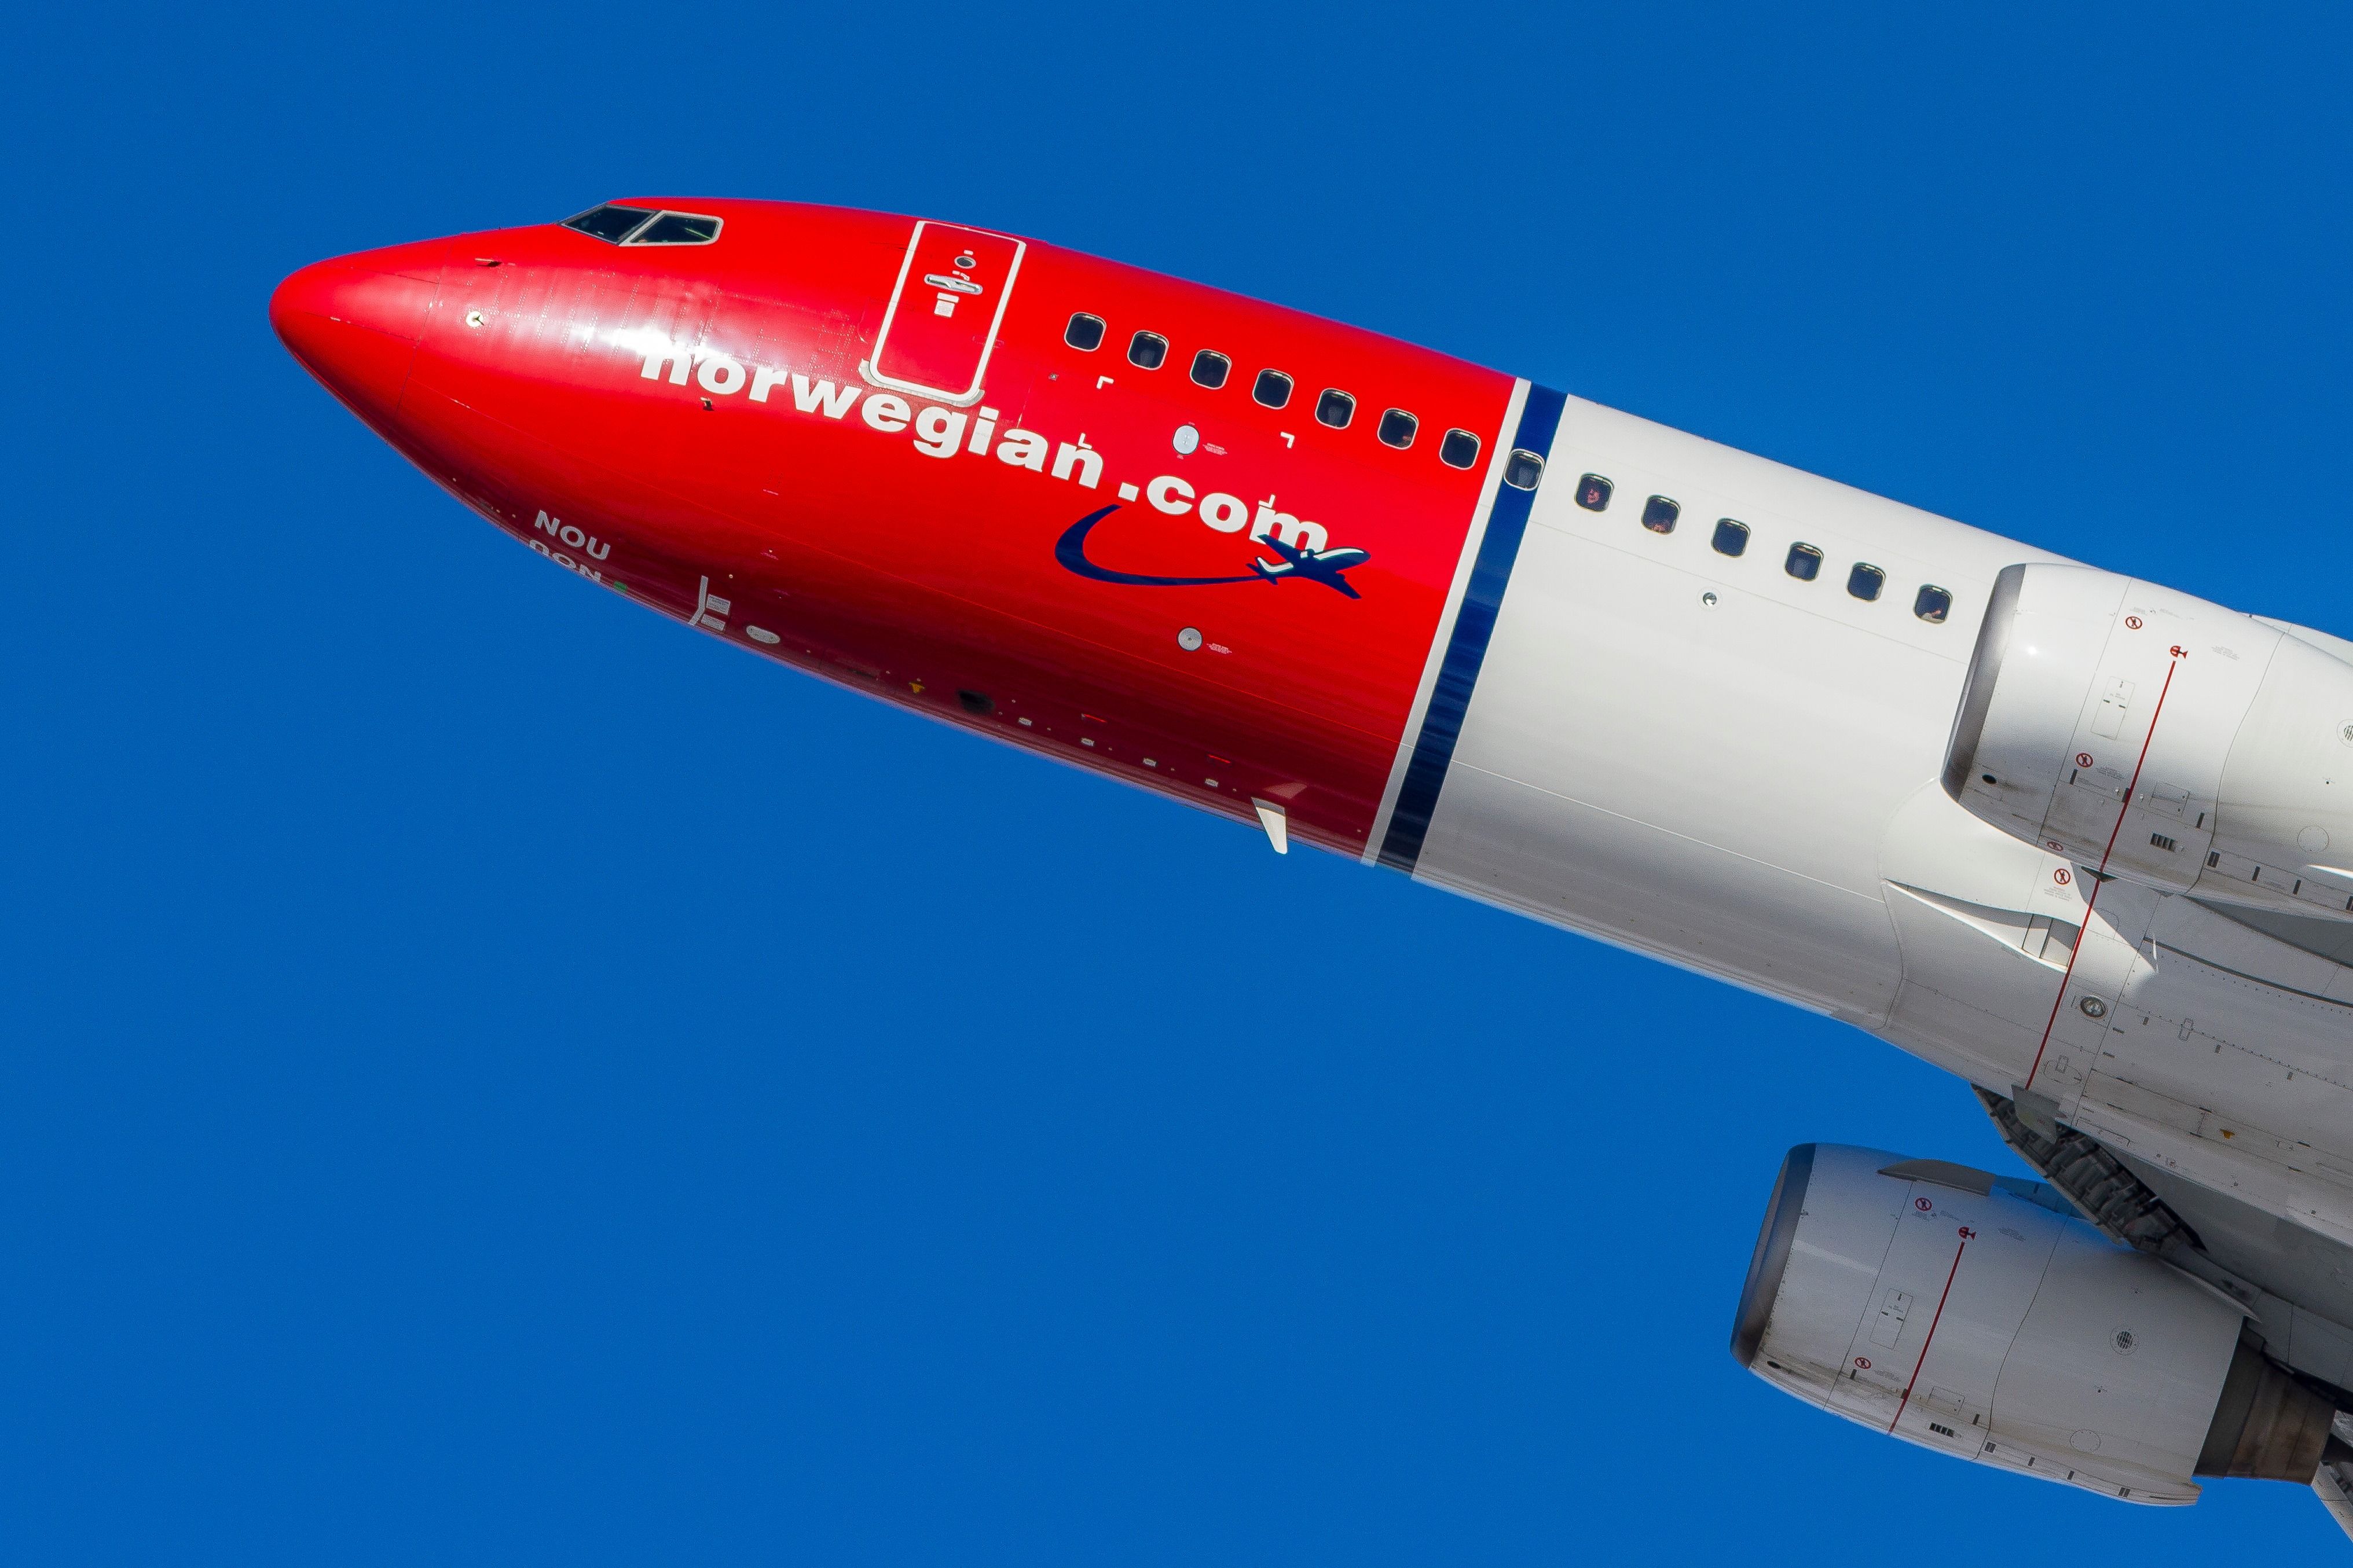 A Norwegian 737 taking off